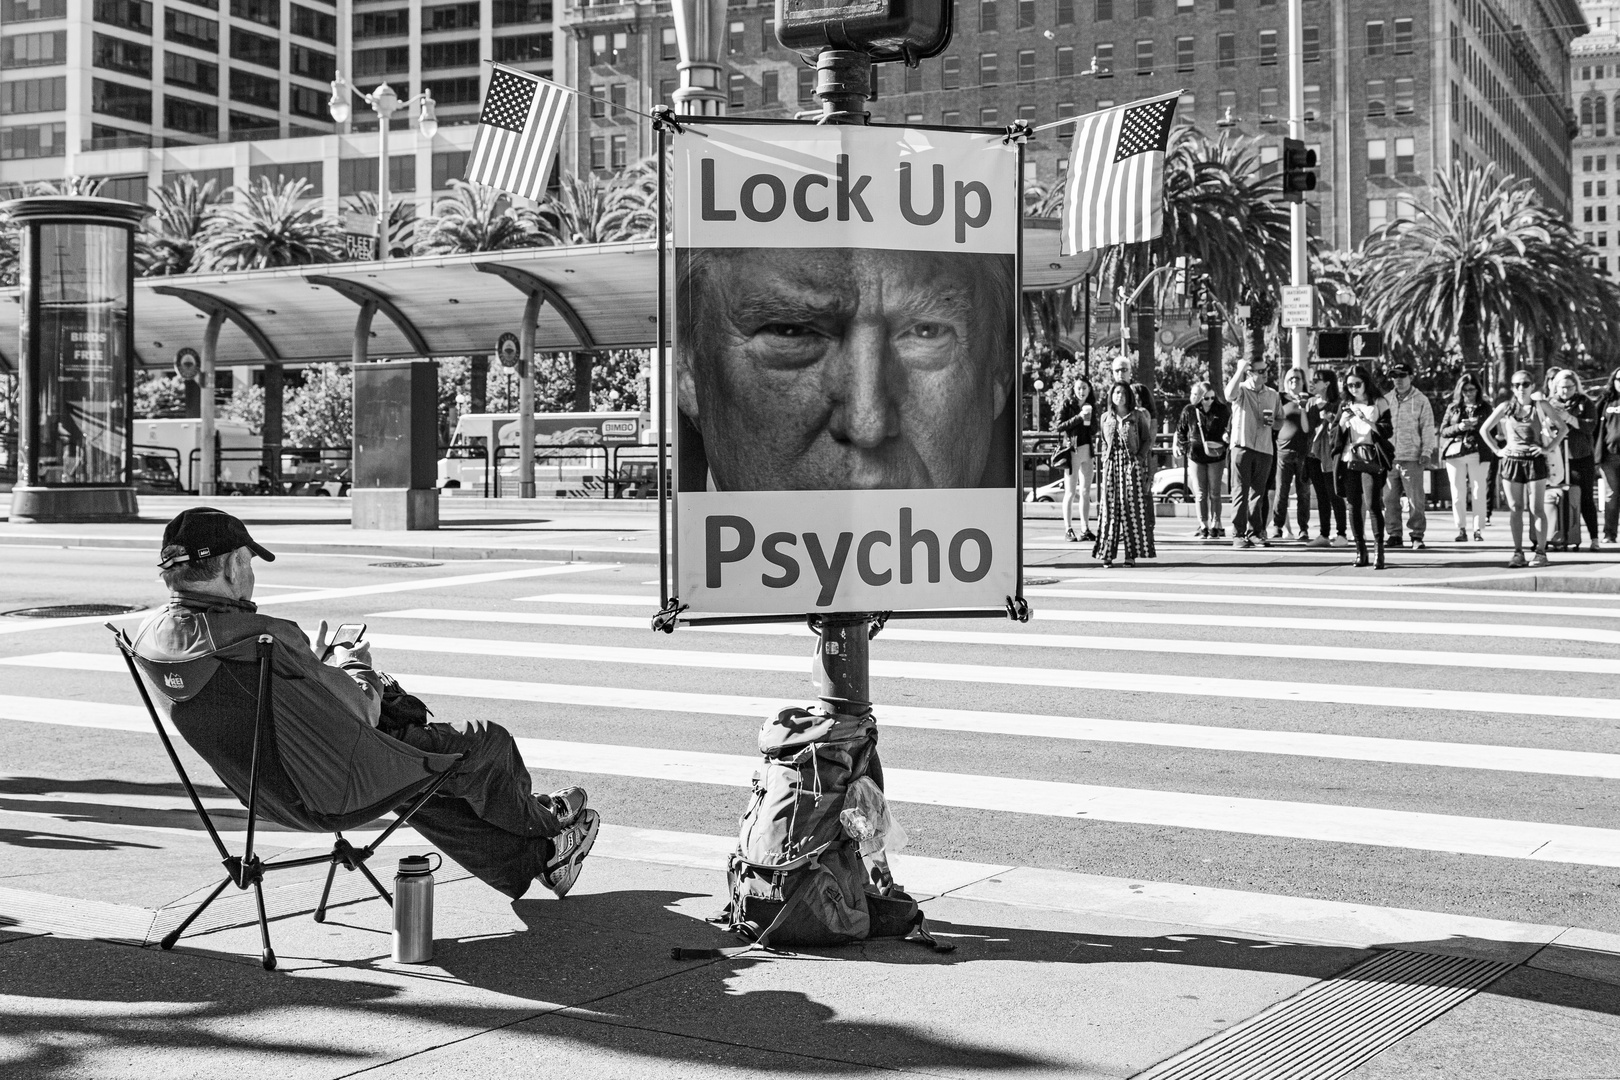 Lock Up Psycho